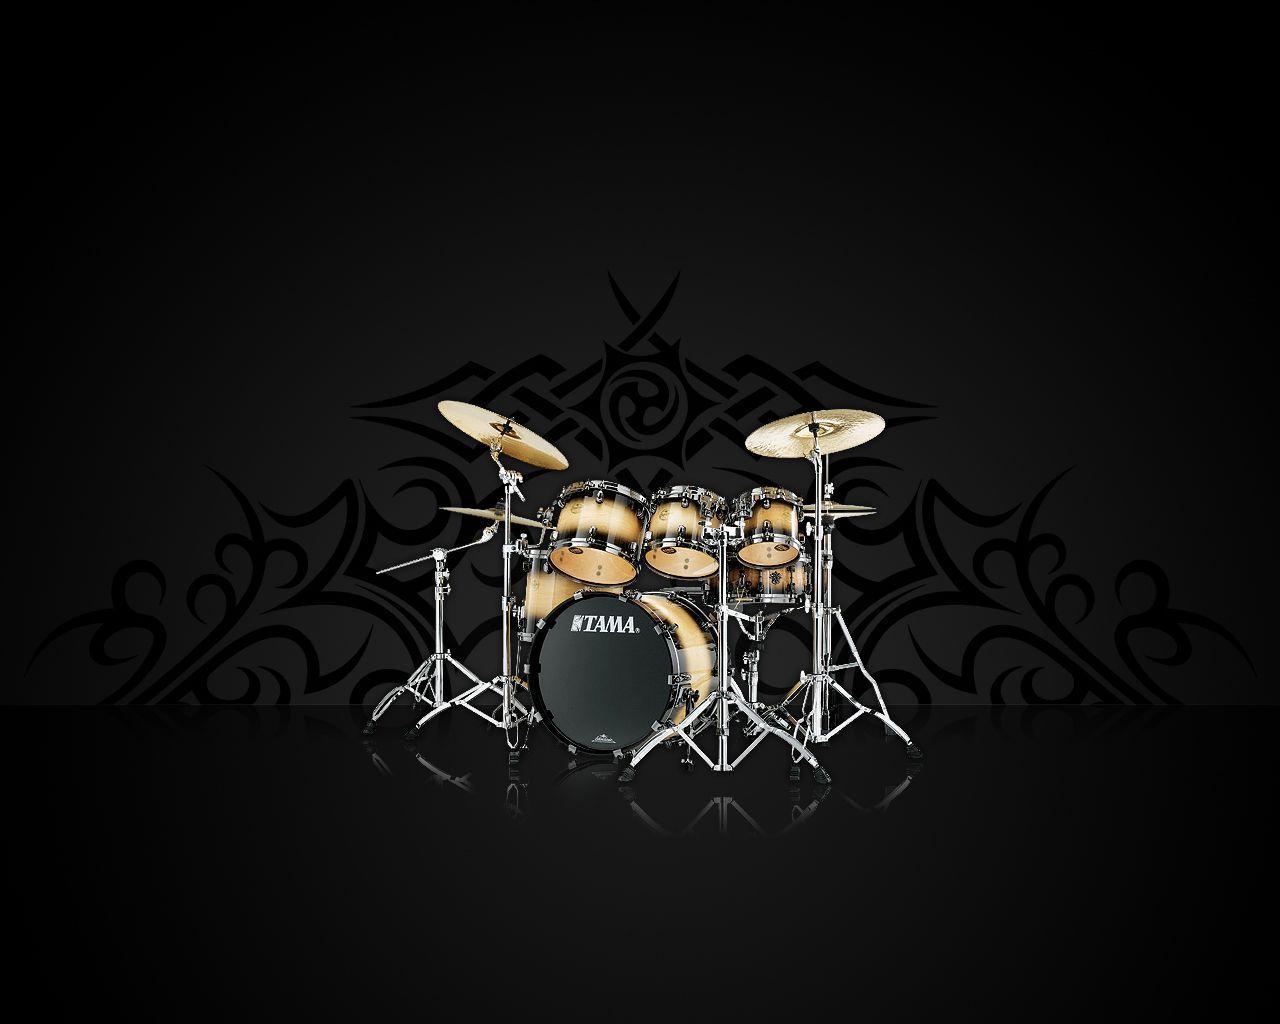 Drum Wallpaper?.com Forum / DRUM FORUM for Drums